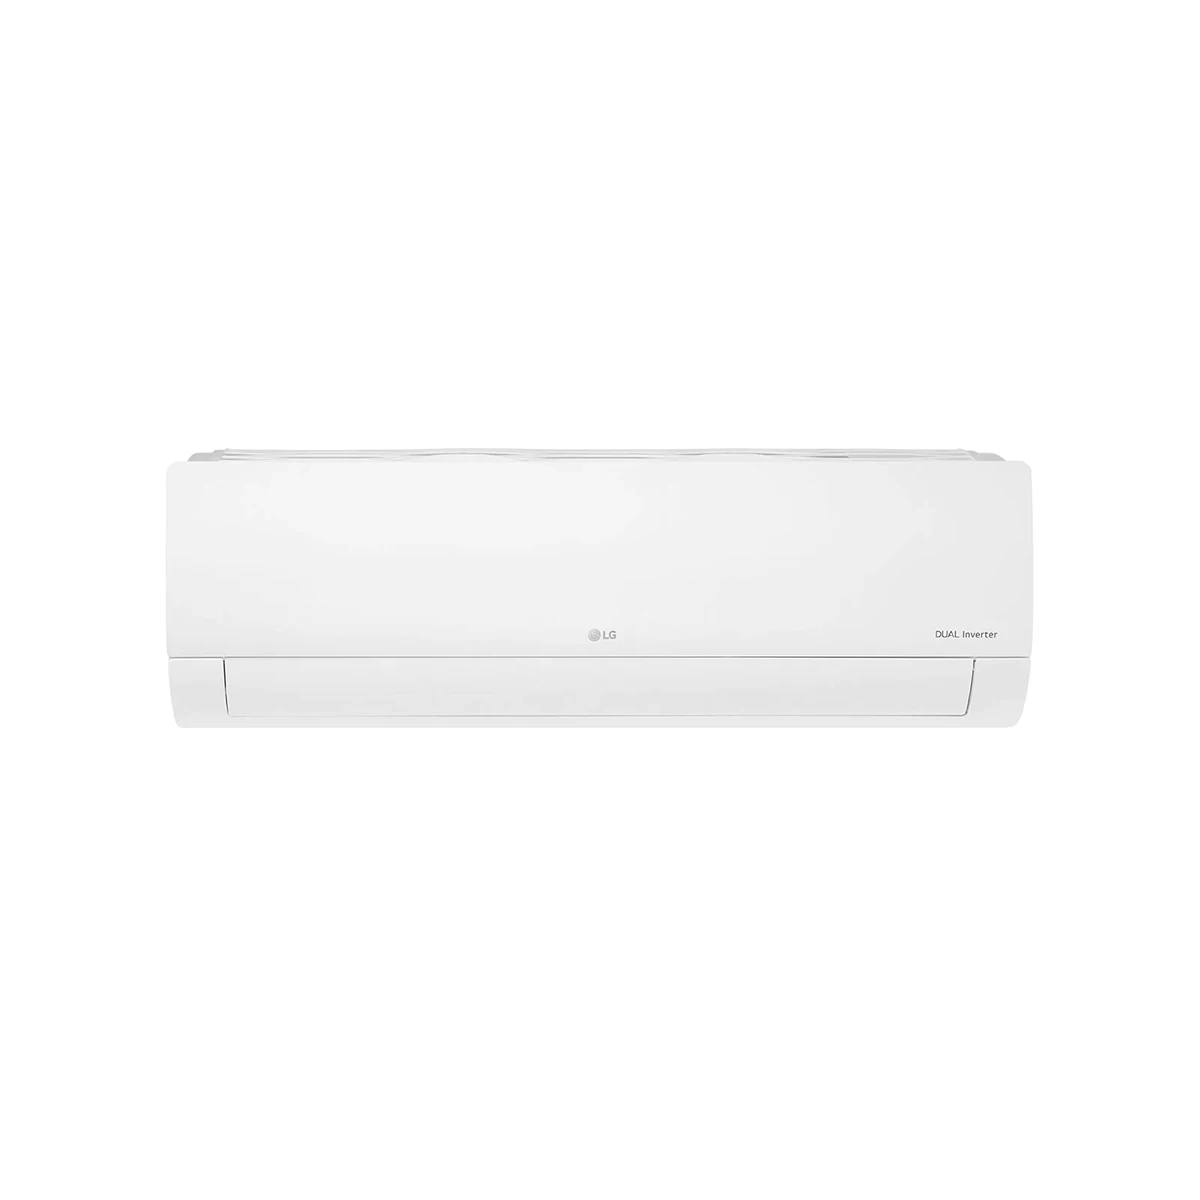 LG - Air condition,Split, 1.5HP,cooling,Inverter,white